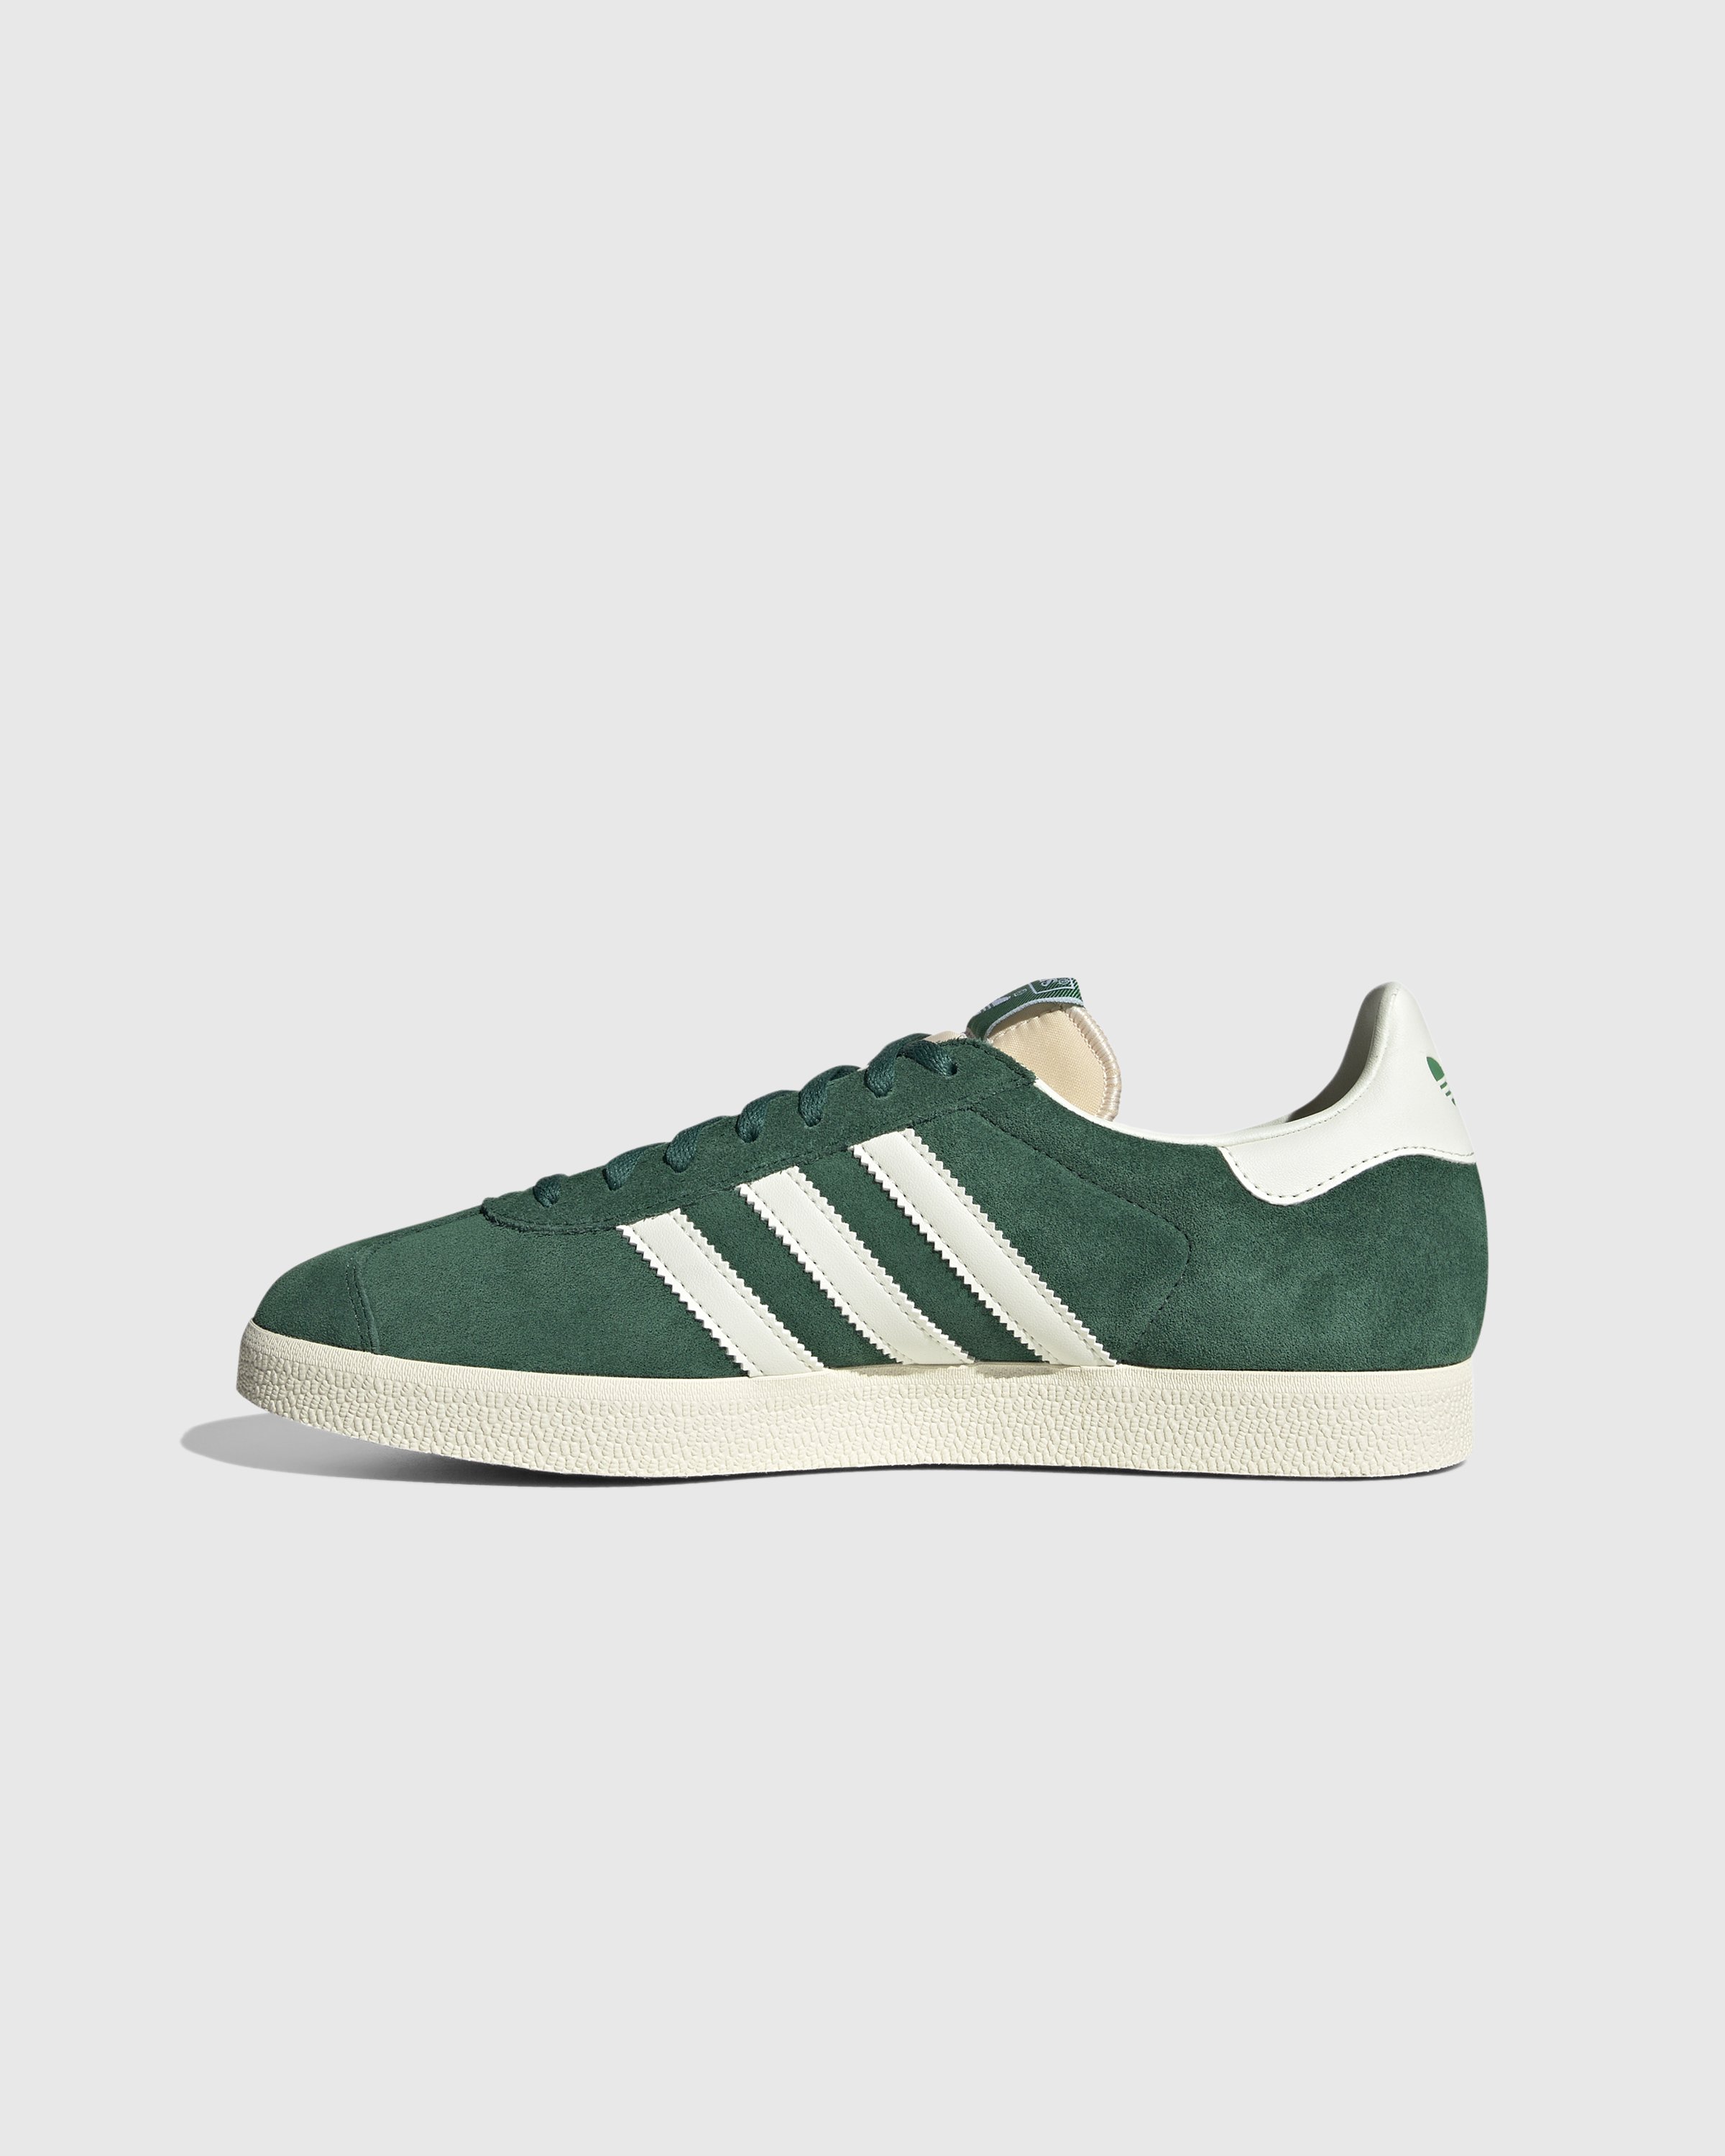 Adidas - Gazelle Green/White - Footwear - Green - Image 2